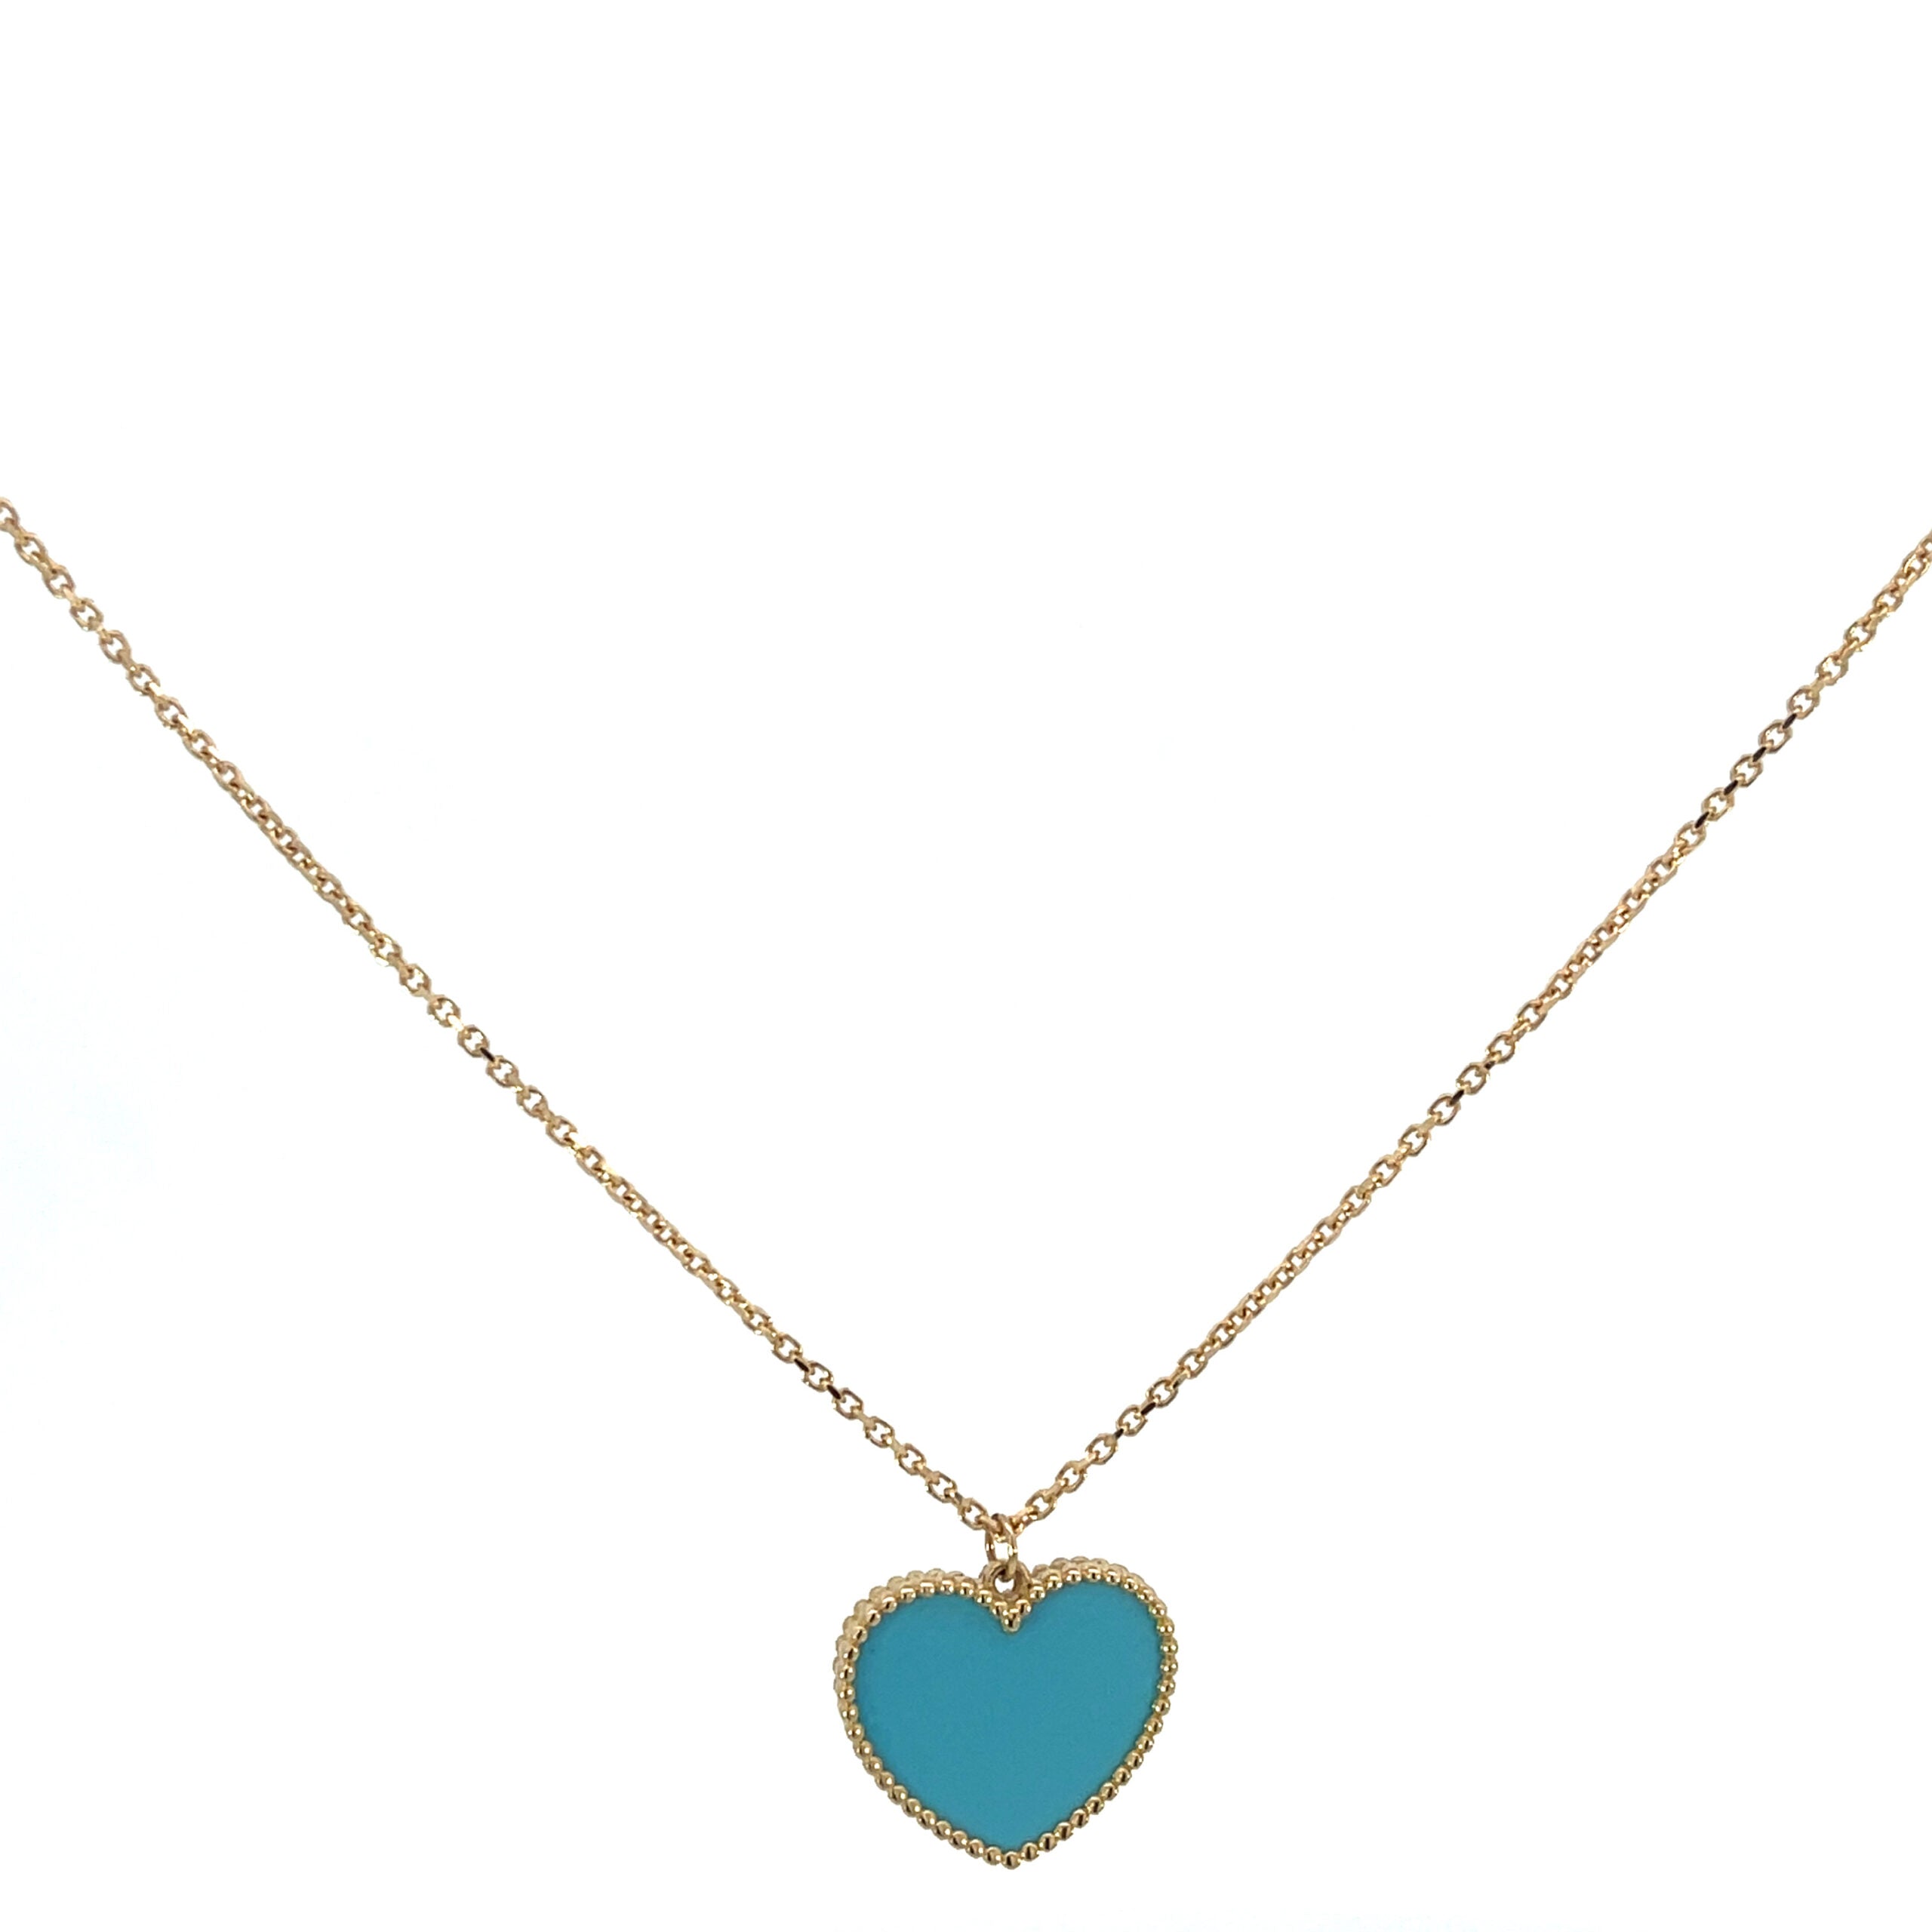 TURQUOISE Heart shaped pendant necklace